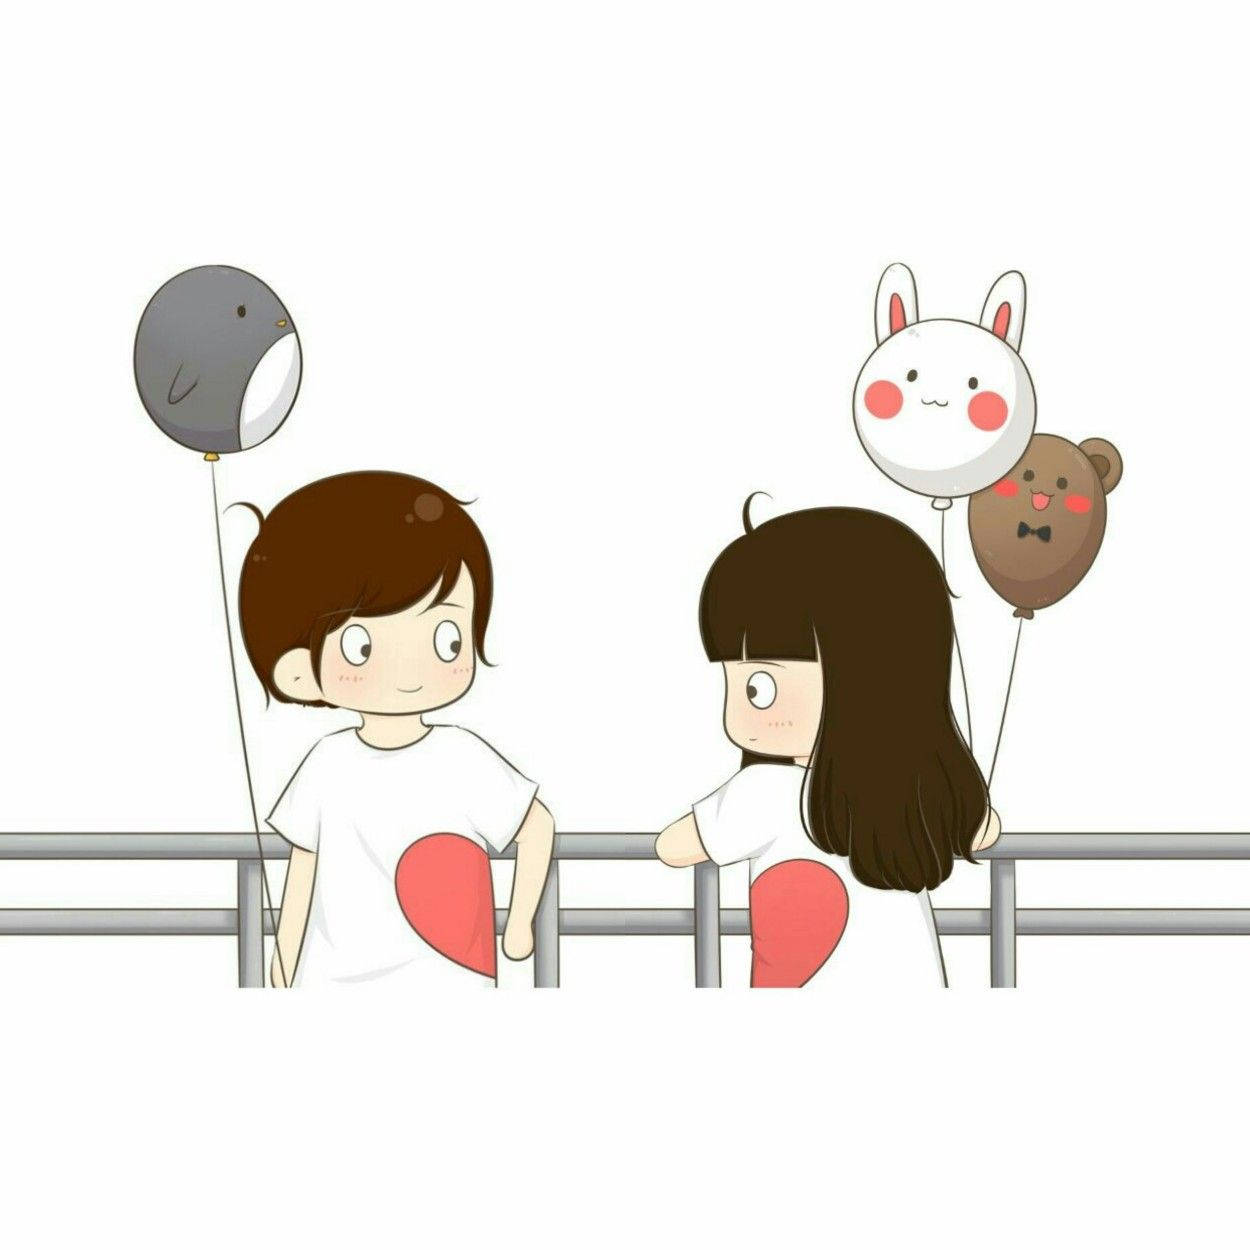 Cute Cartoon Couple Balloon Date Background